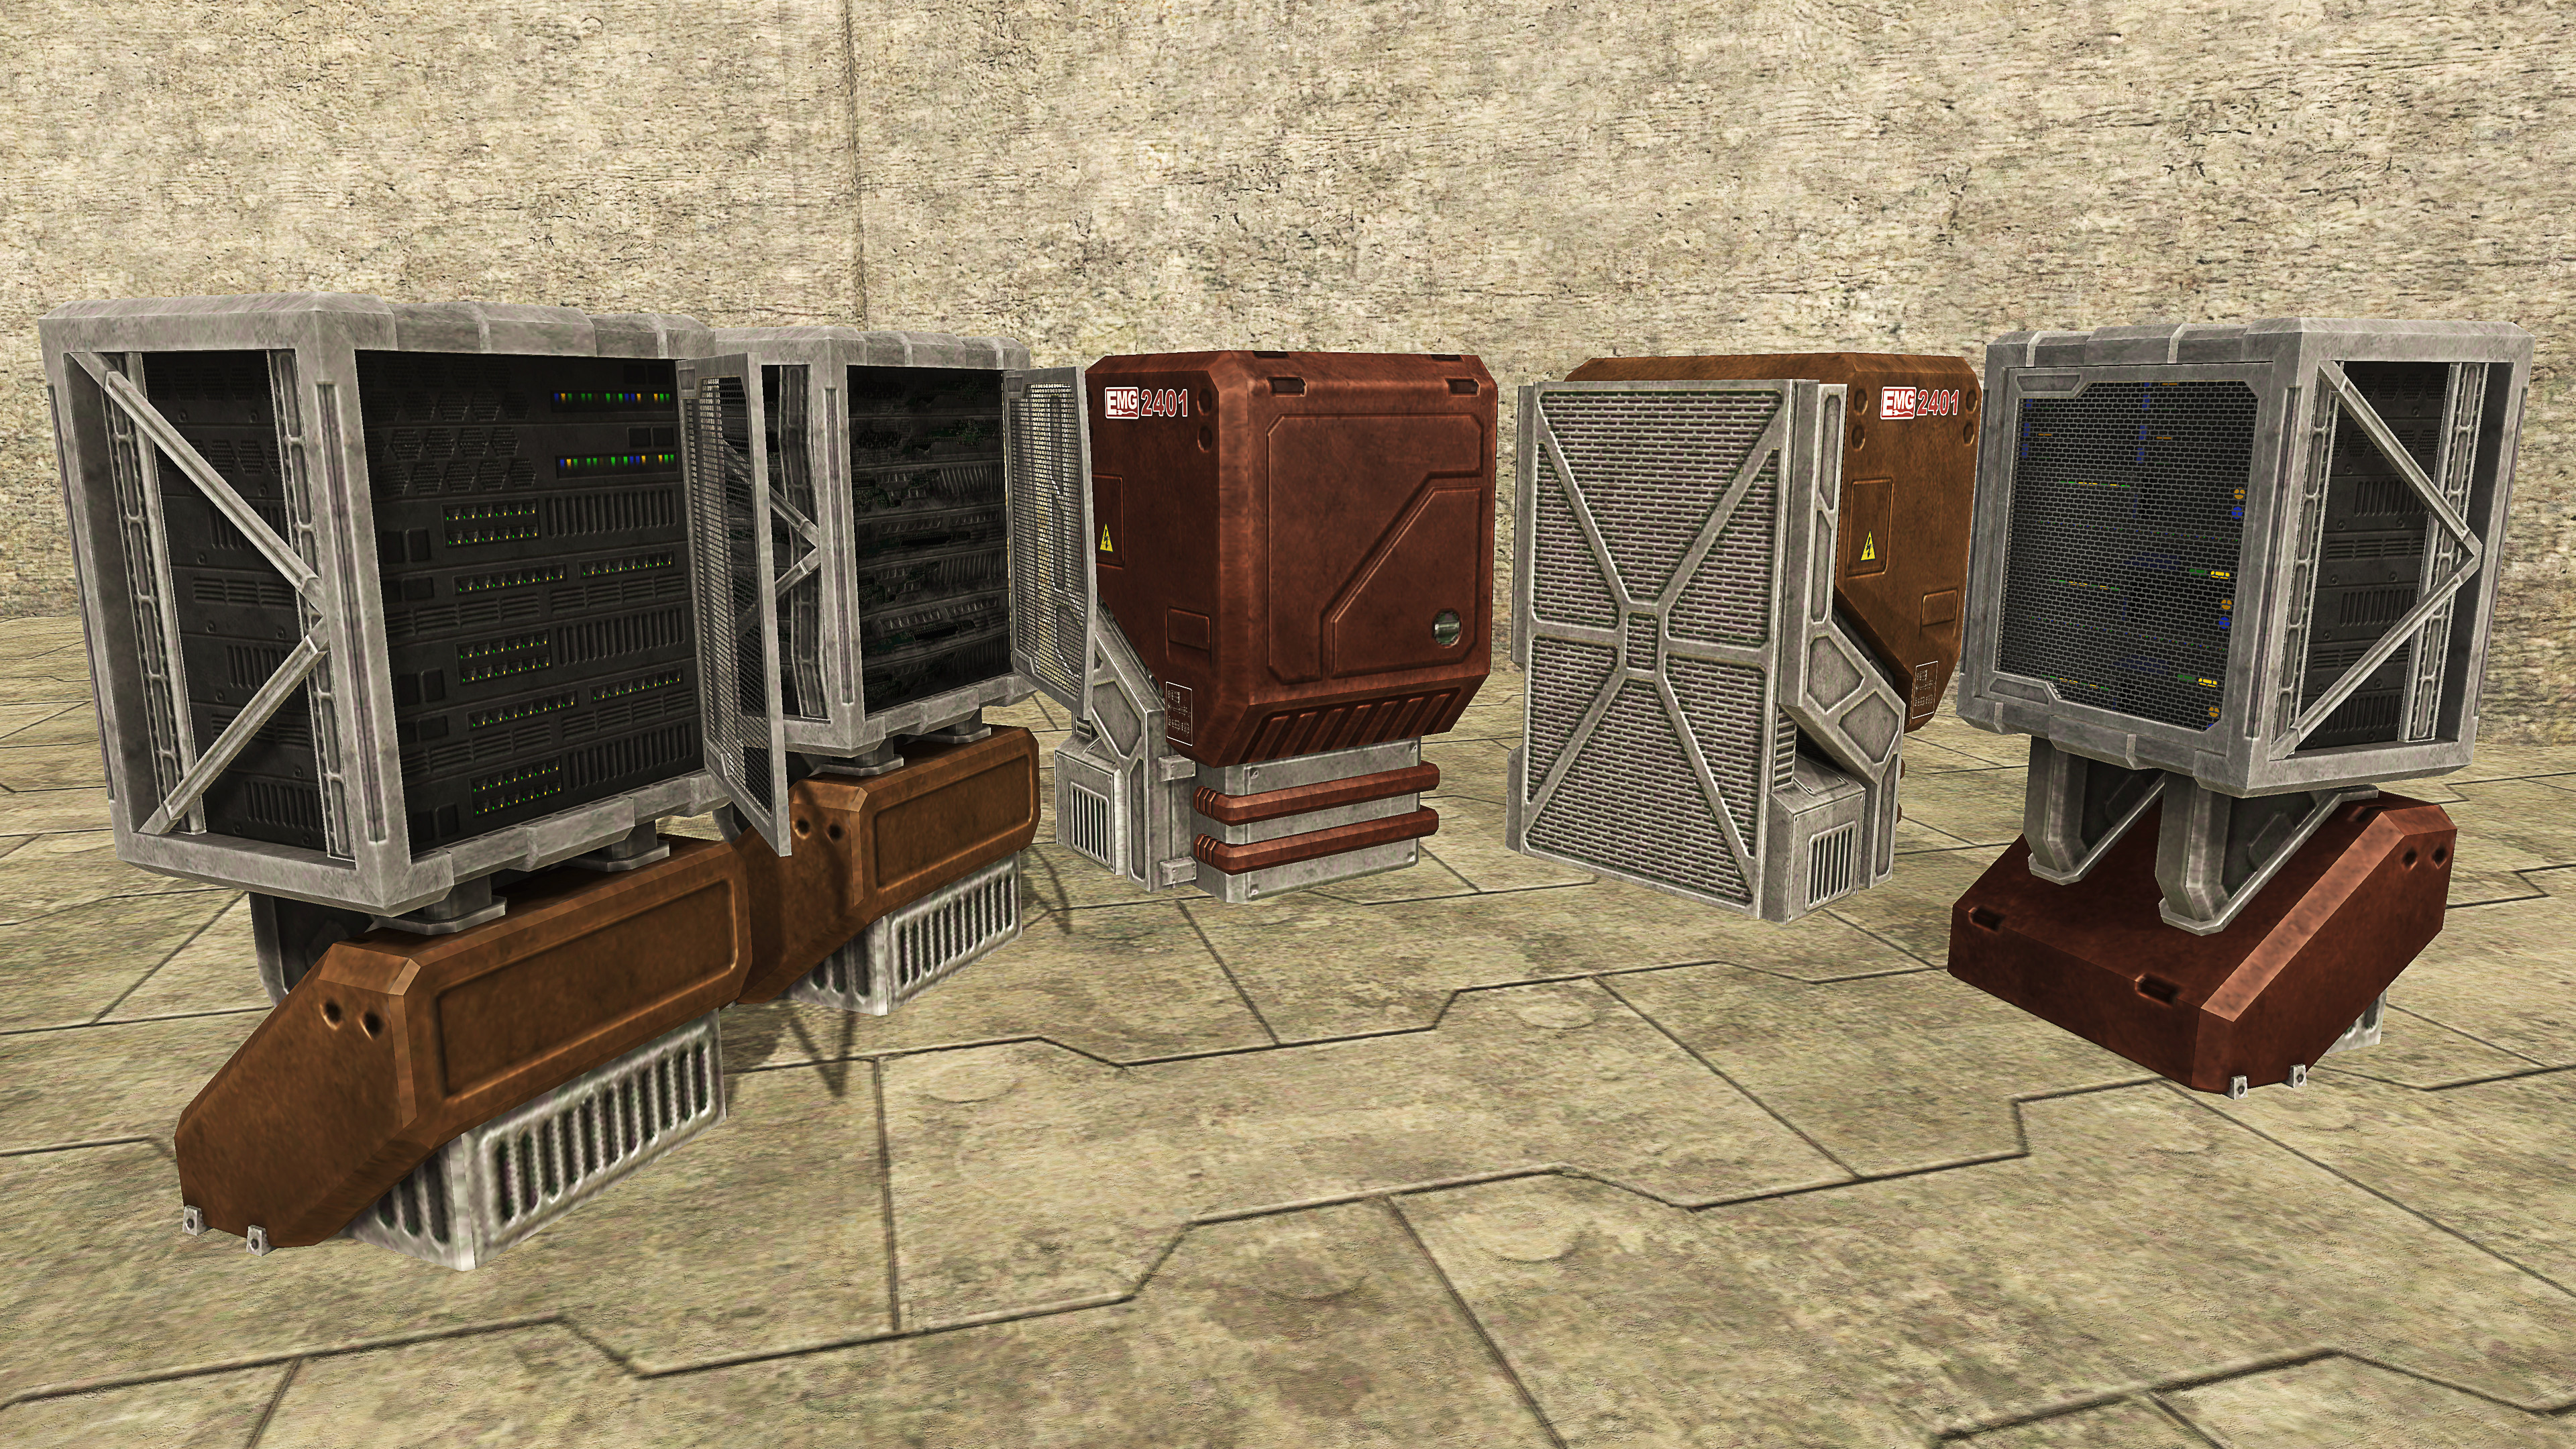 Halo 3 - Computer Servers